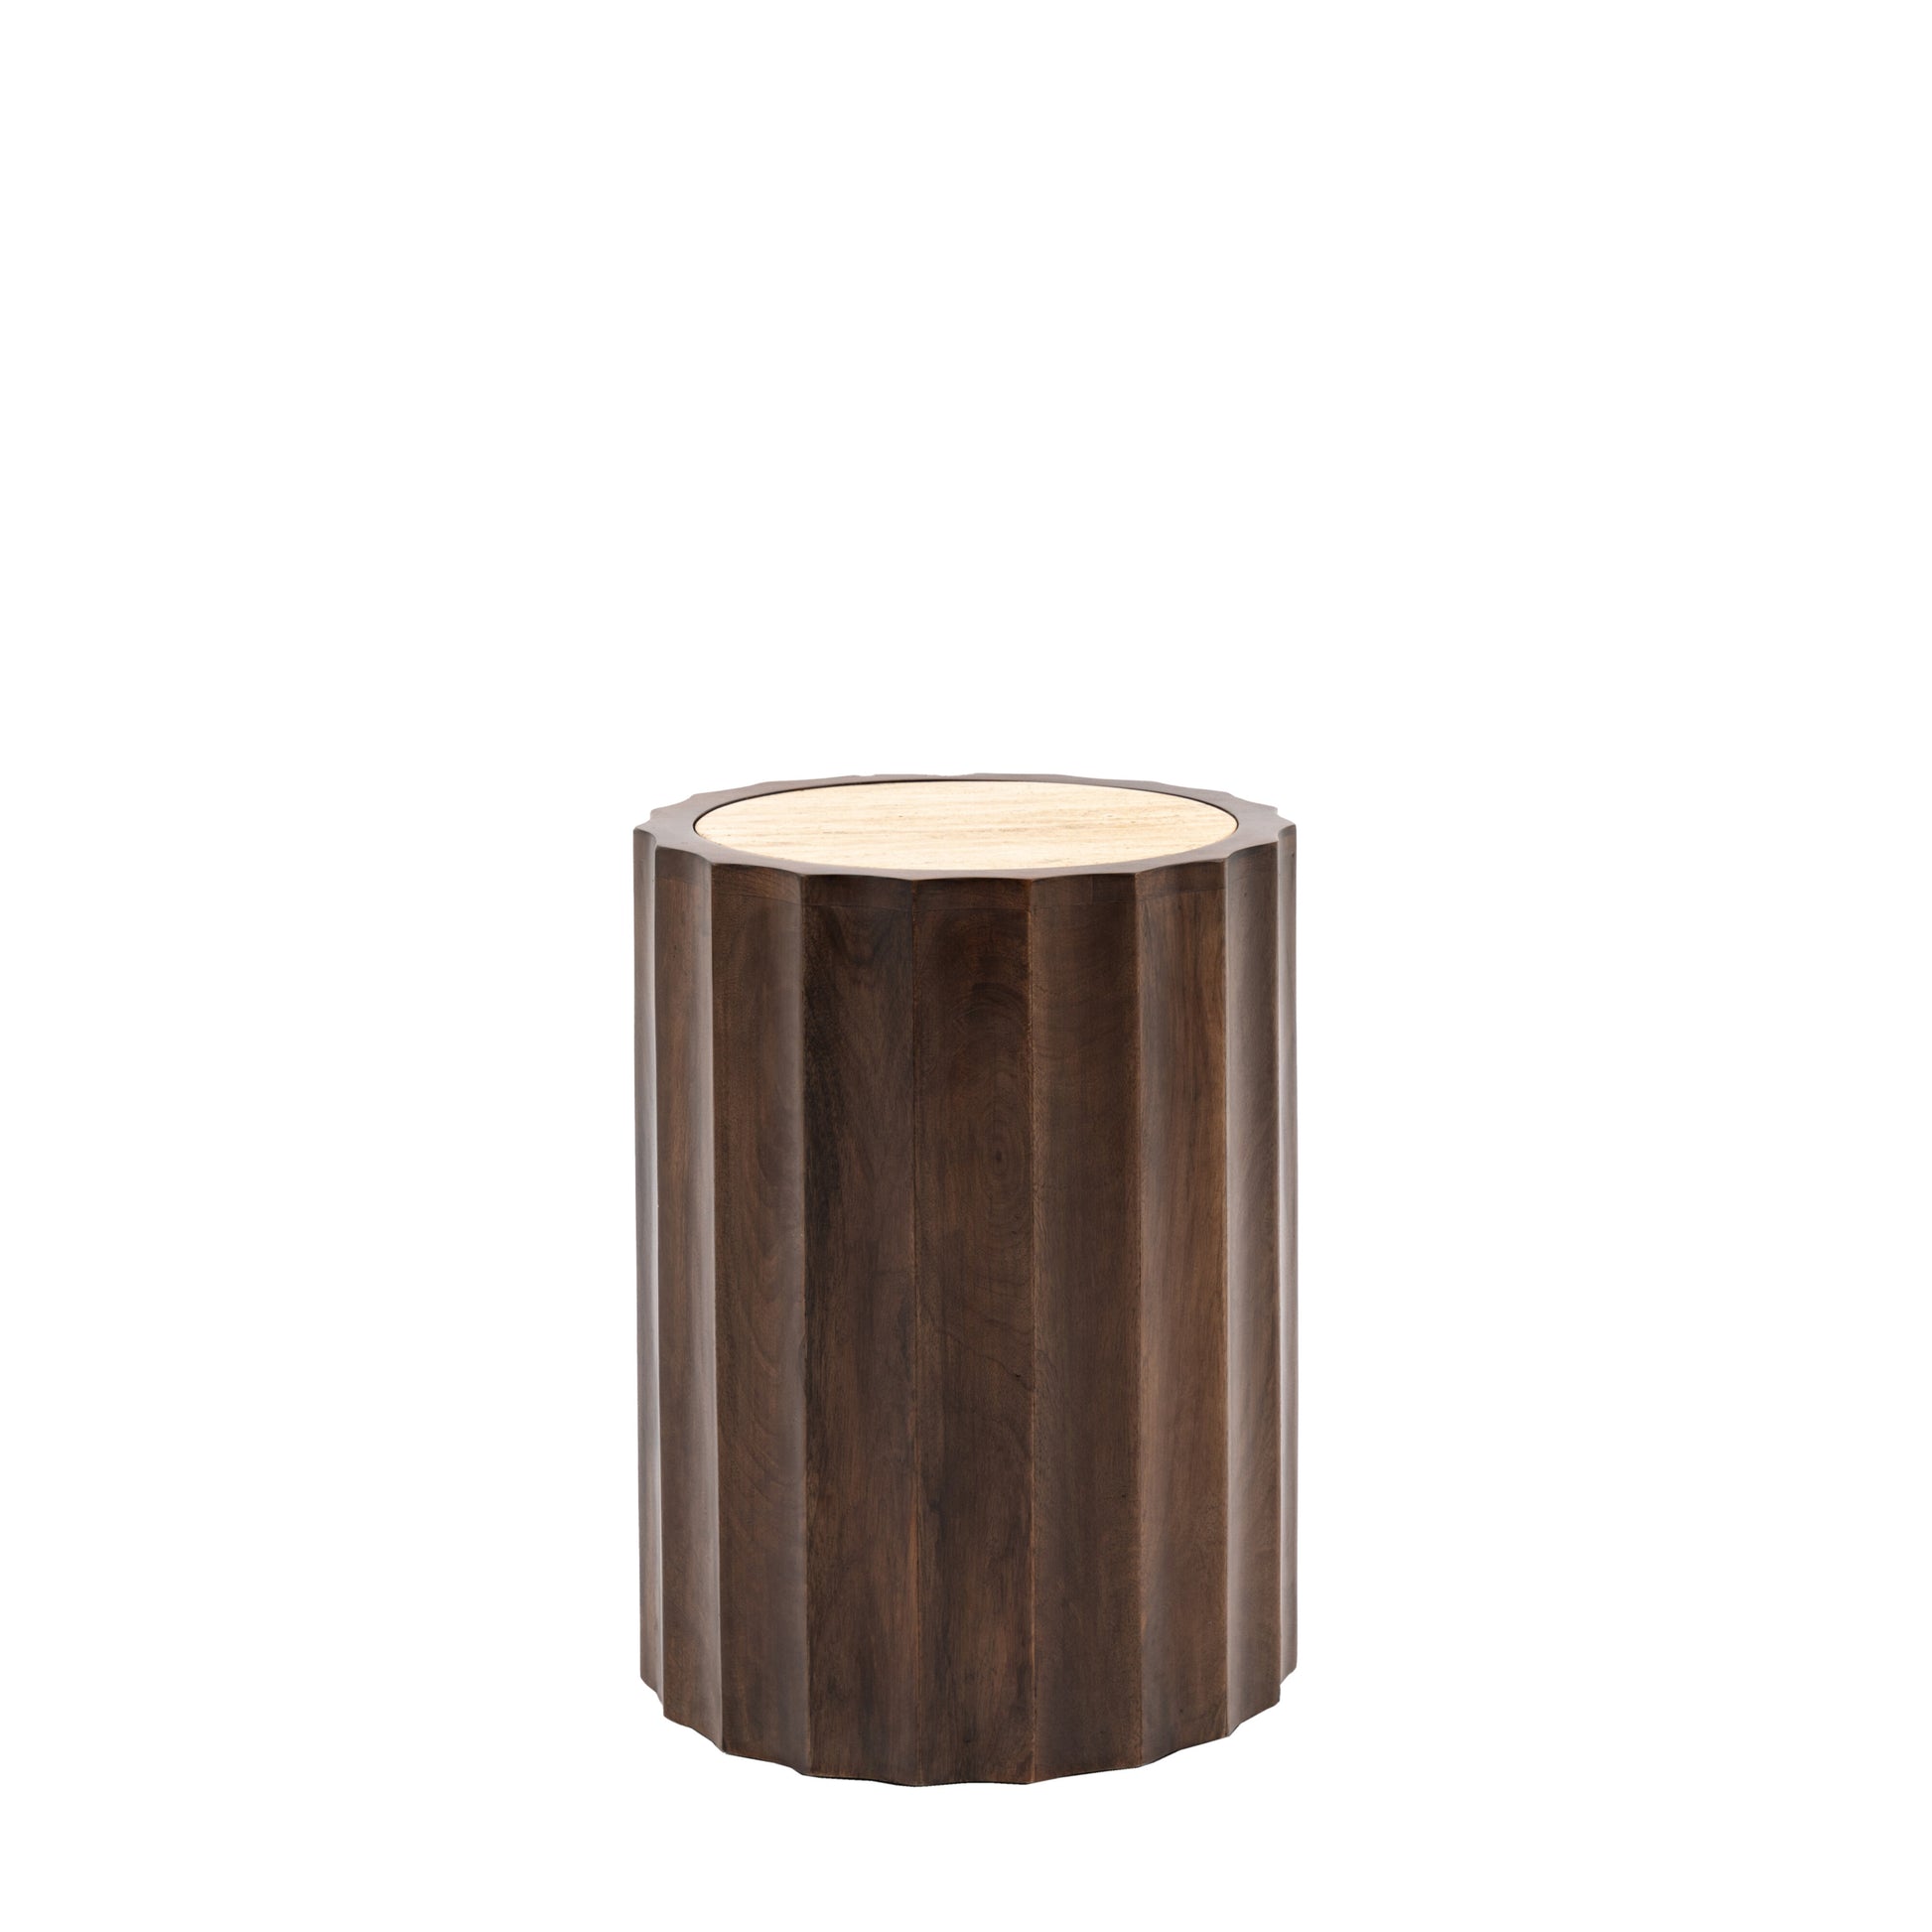 Travertine Stone and Dark Wood Side Table